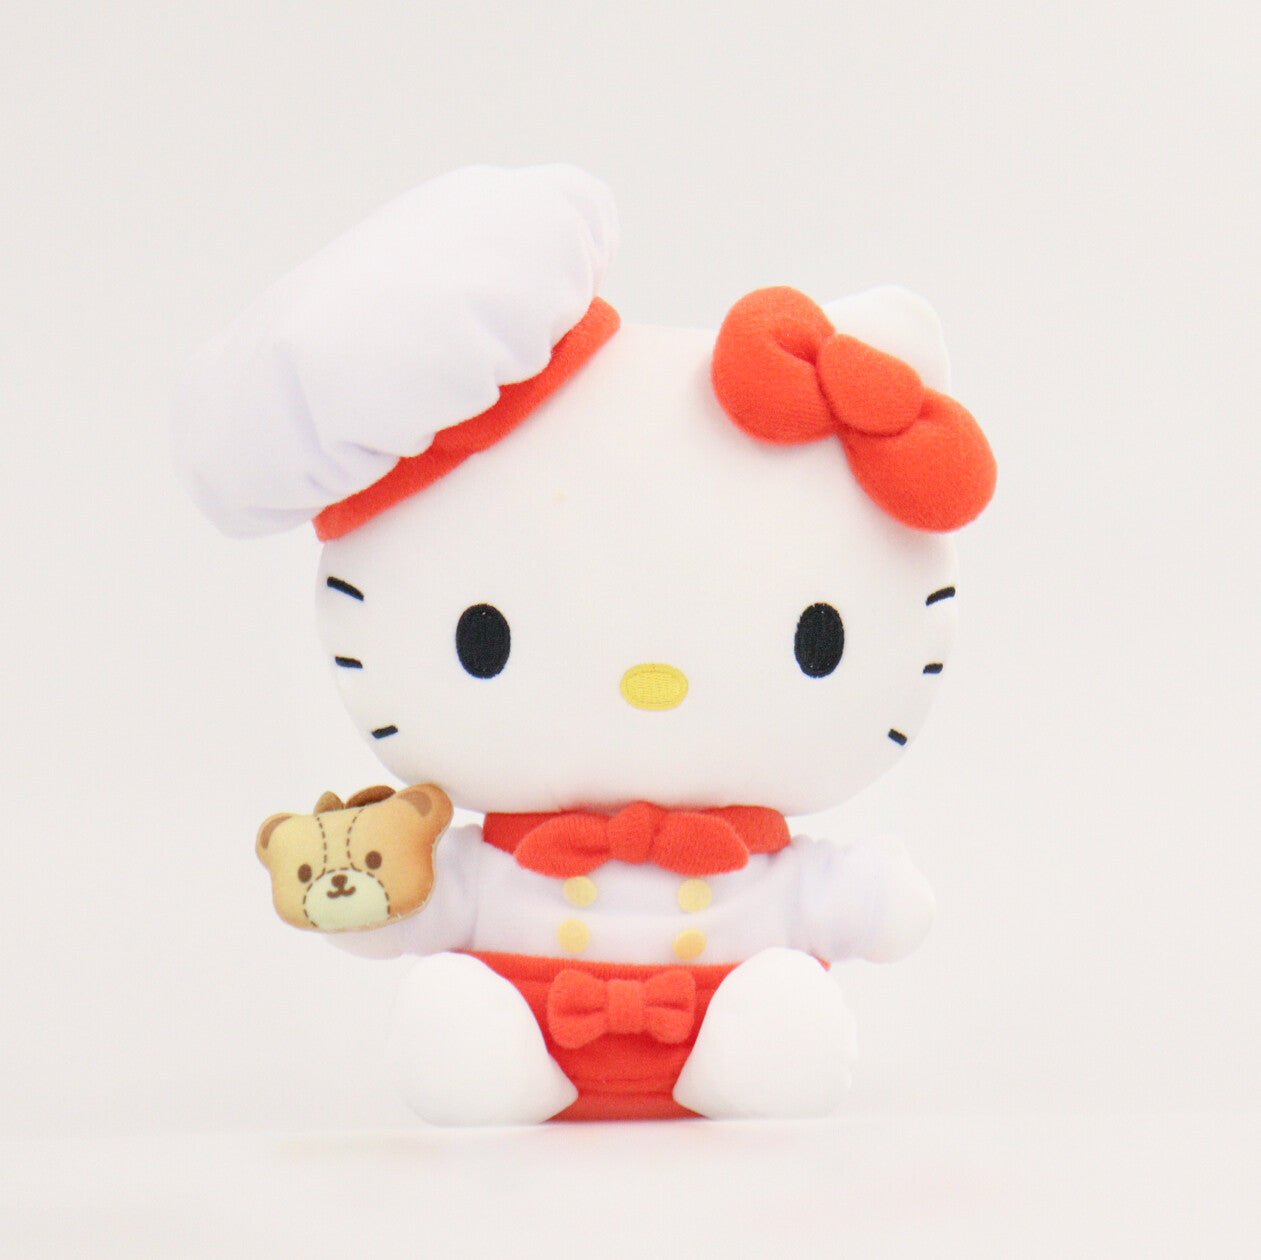 [Hello Kitty] "Sanrio Bakery" Plush - Rosey’s Kawaii Shop